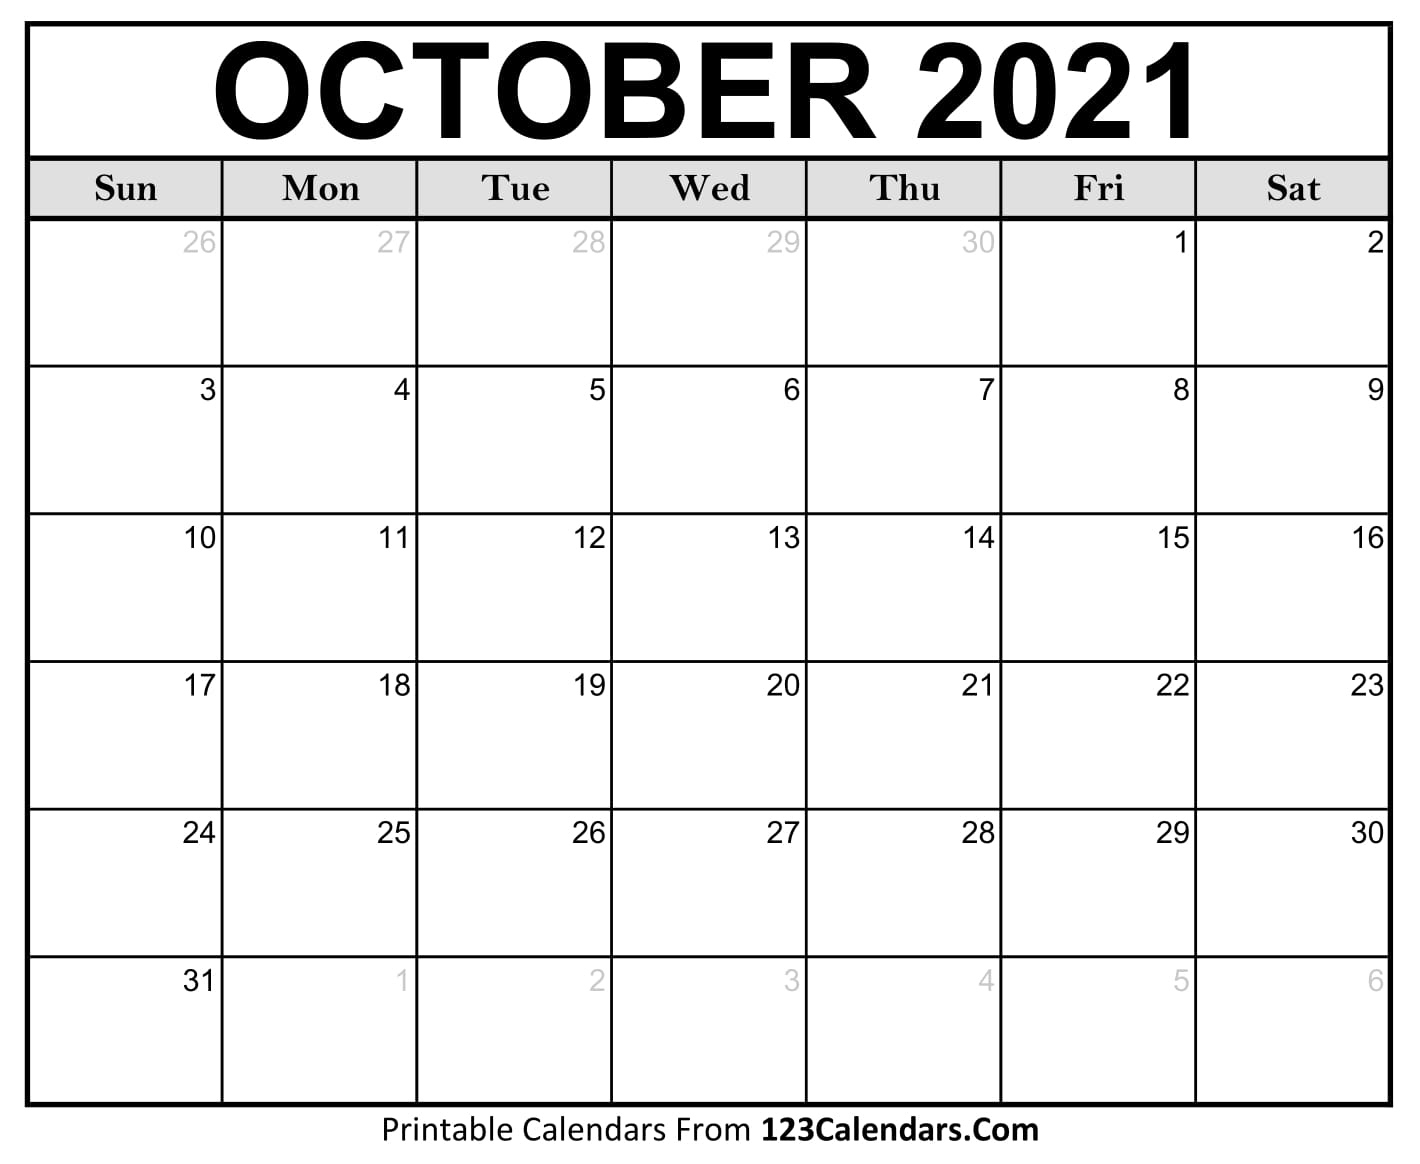 Printable October 2021 Calendar Templates - 123Calendars Calendar From October 2020 To March 2021